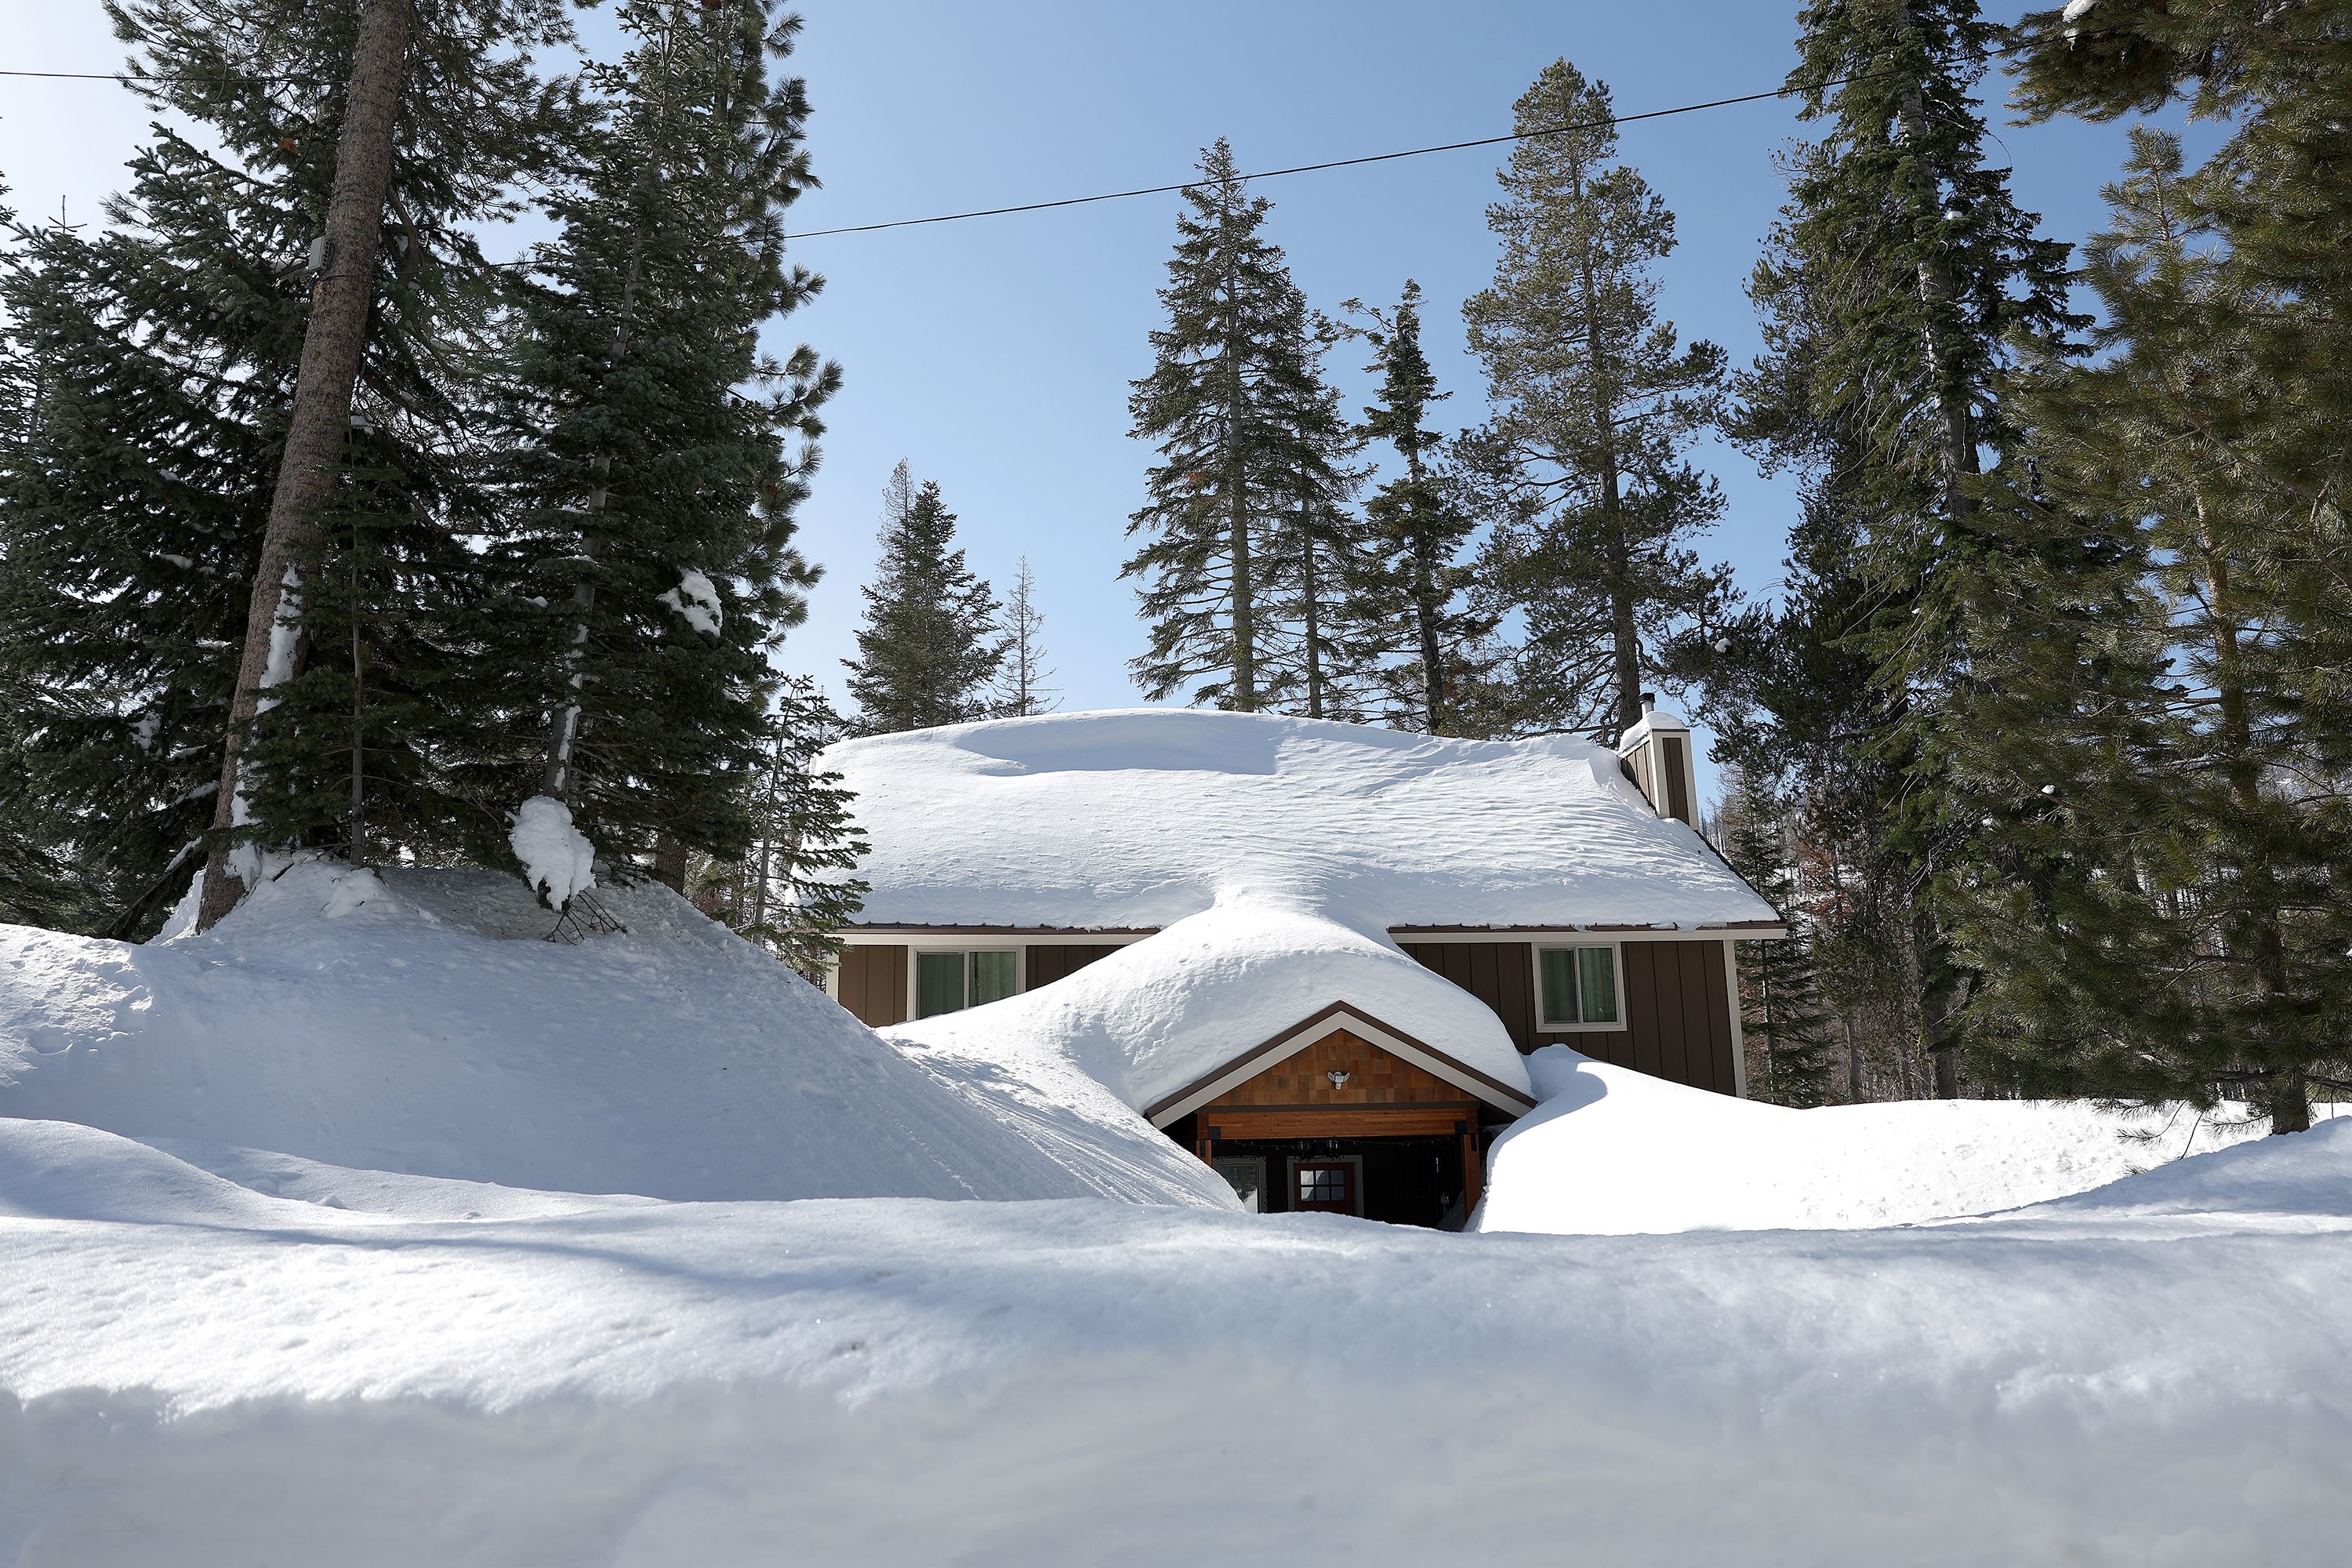 Snowfall records falling but not yet a 'historic' season at Tahoe